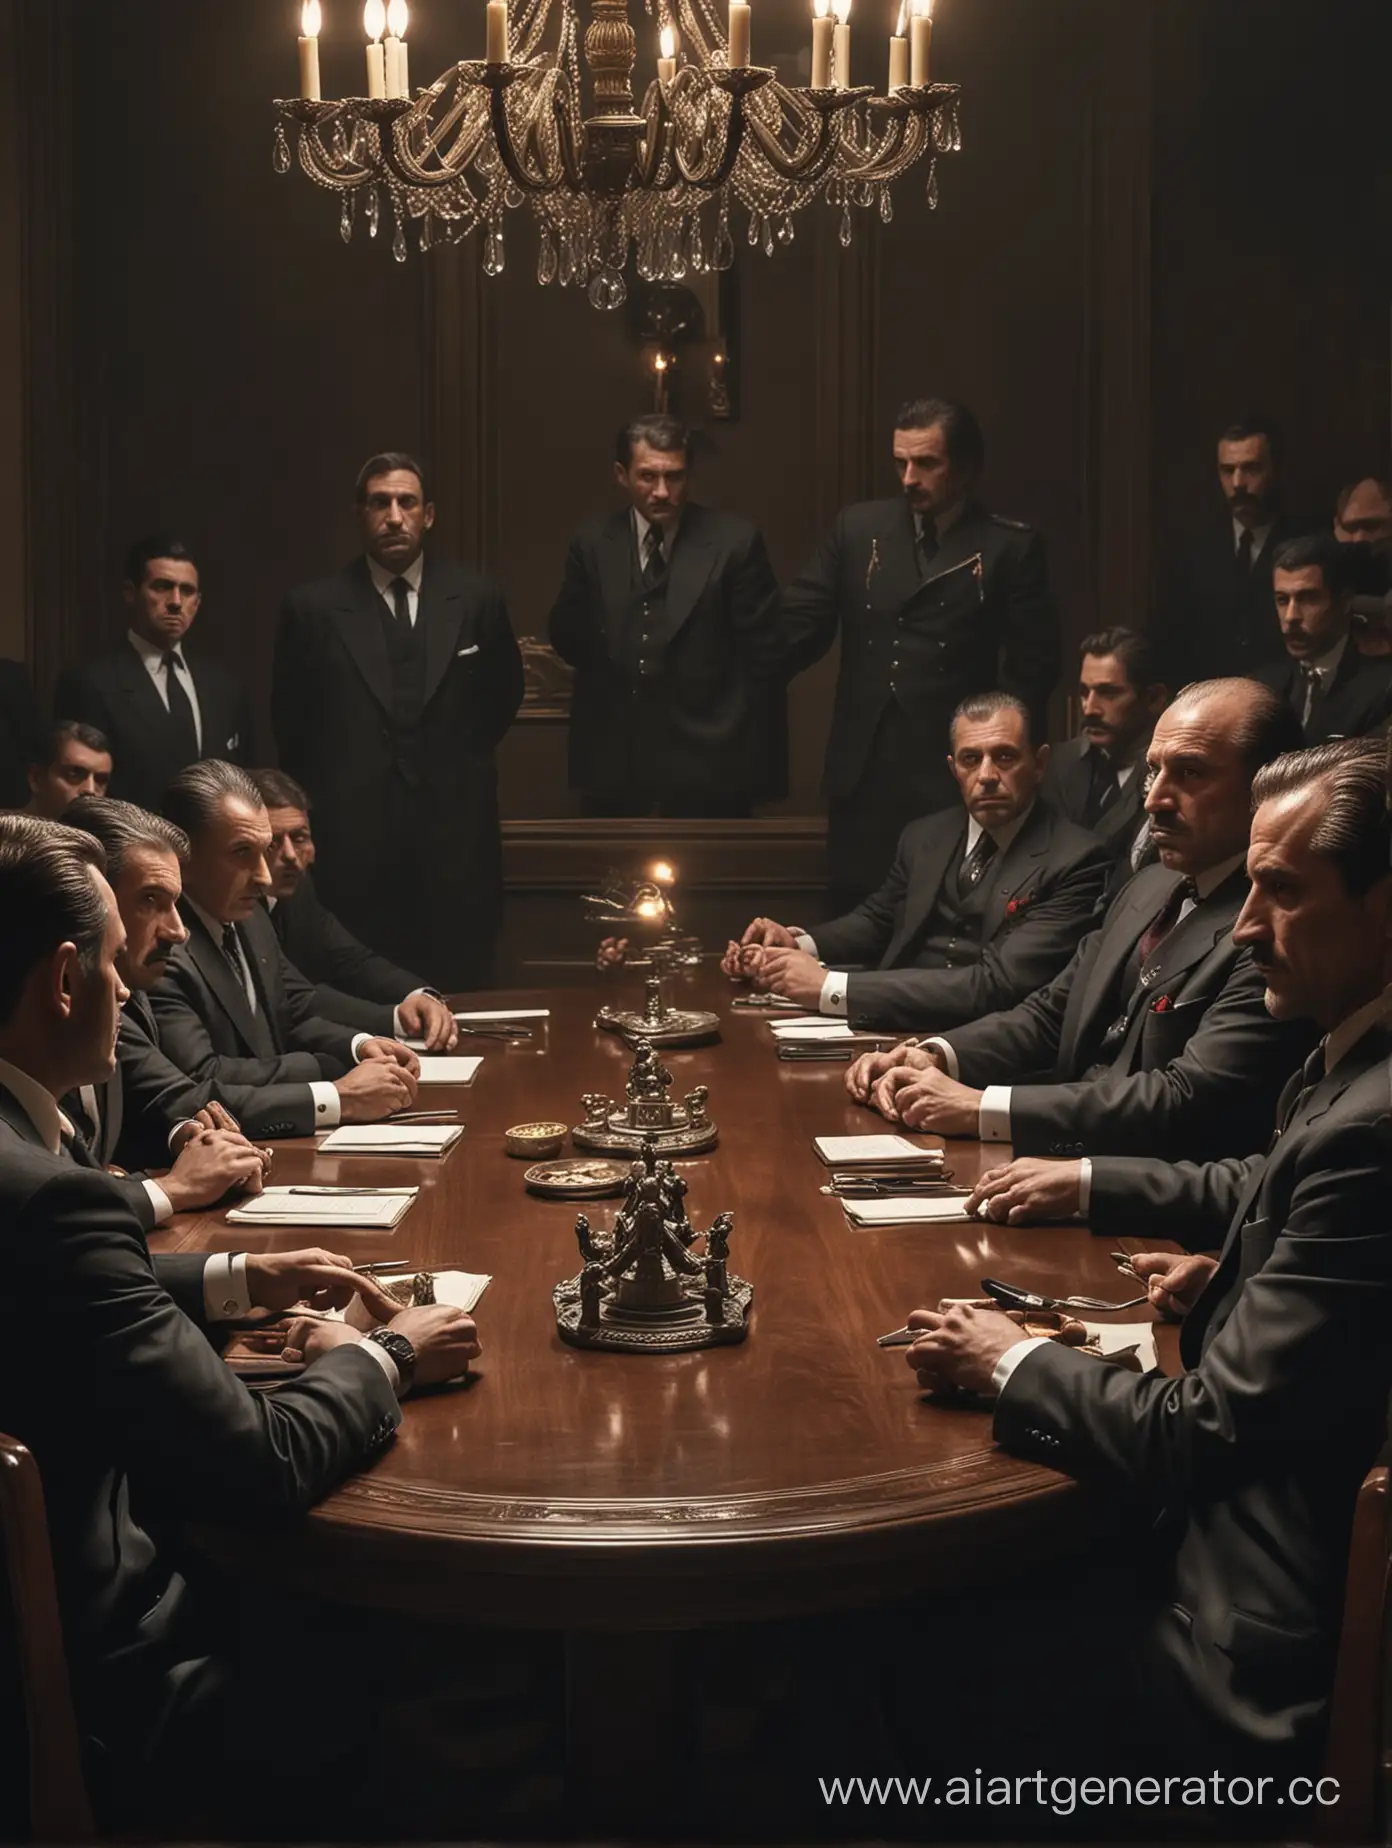 Intimidating-Mafia-Bosses-Surrounded-by-Vigilant-Guards-at-Lavish-Table